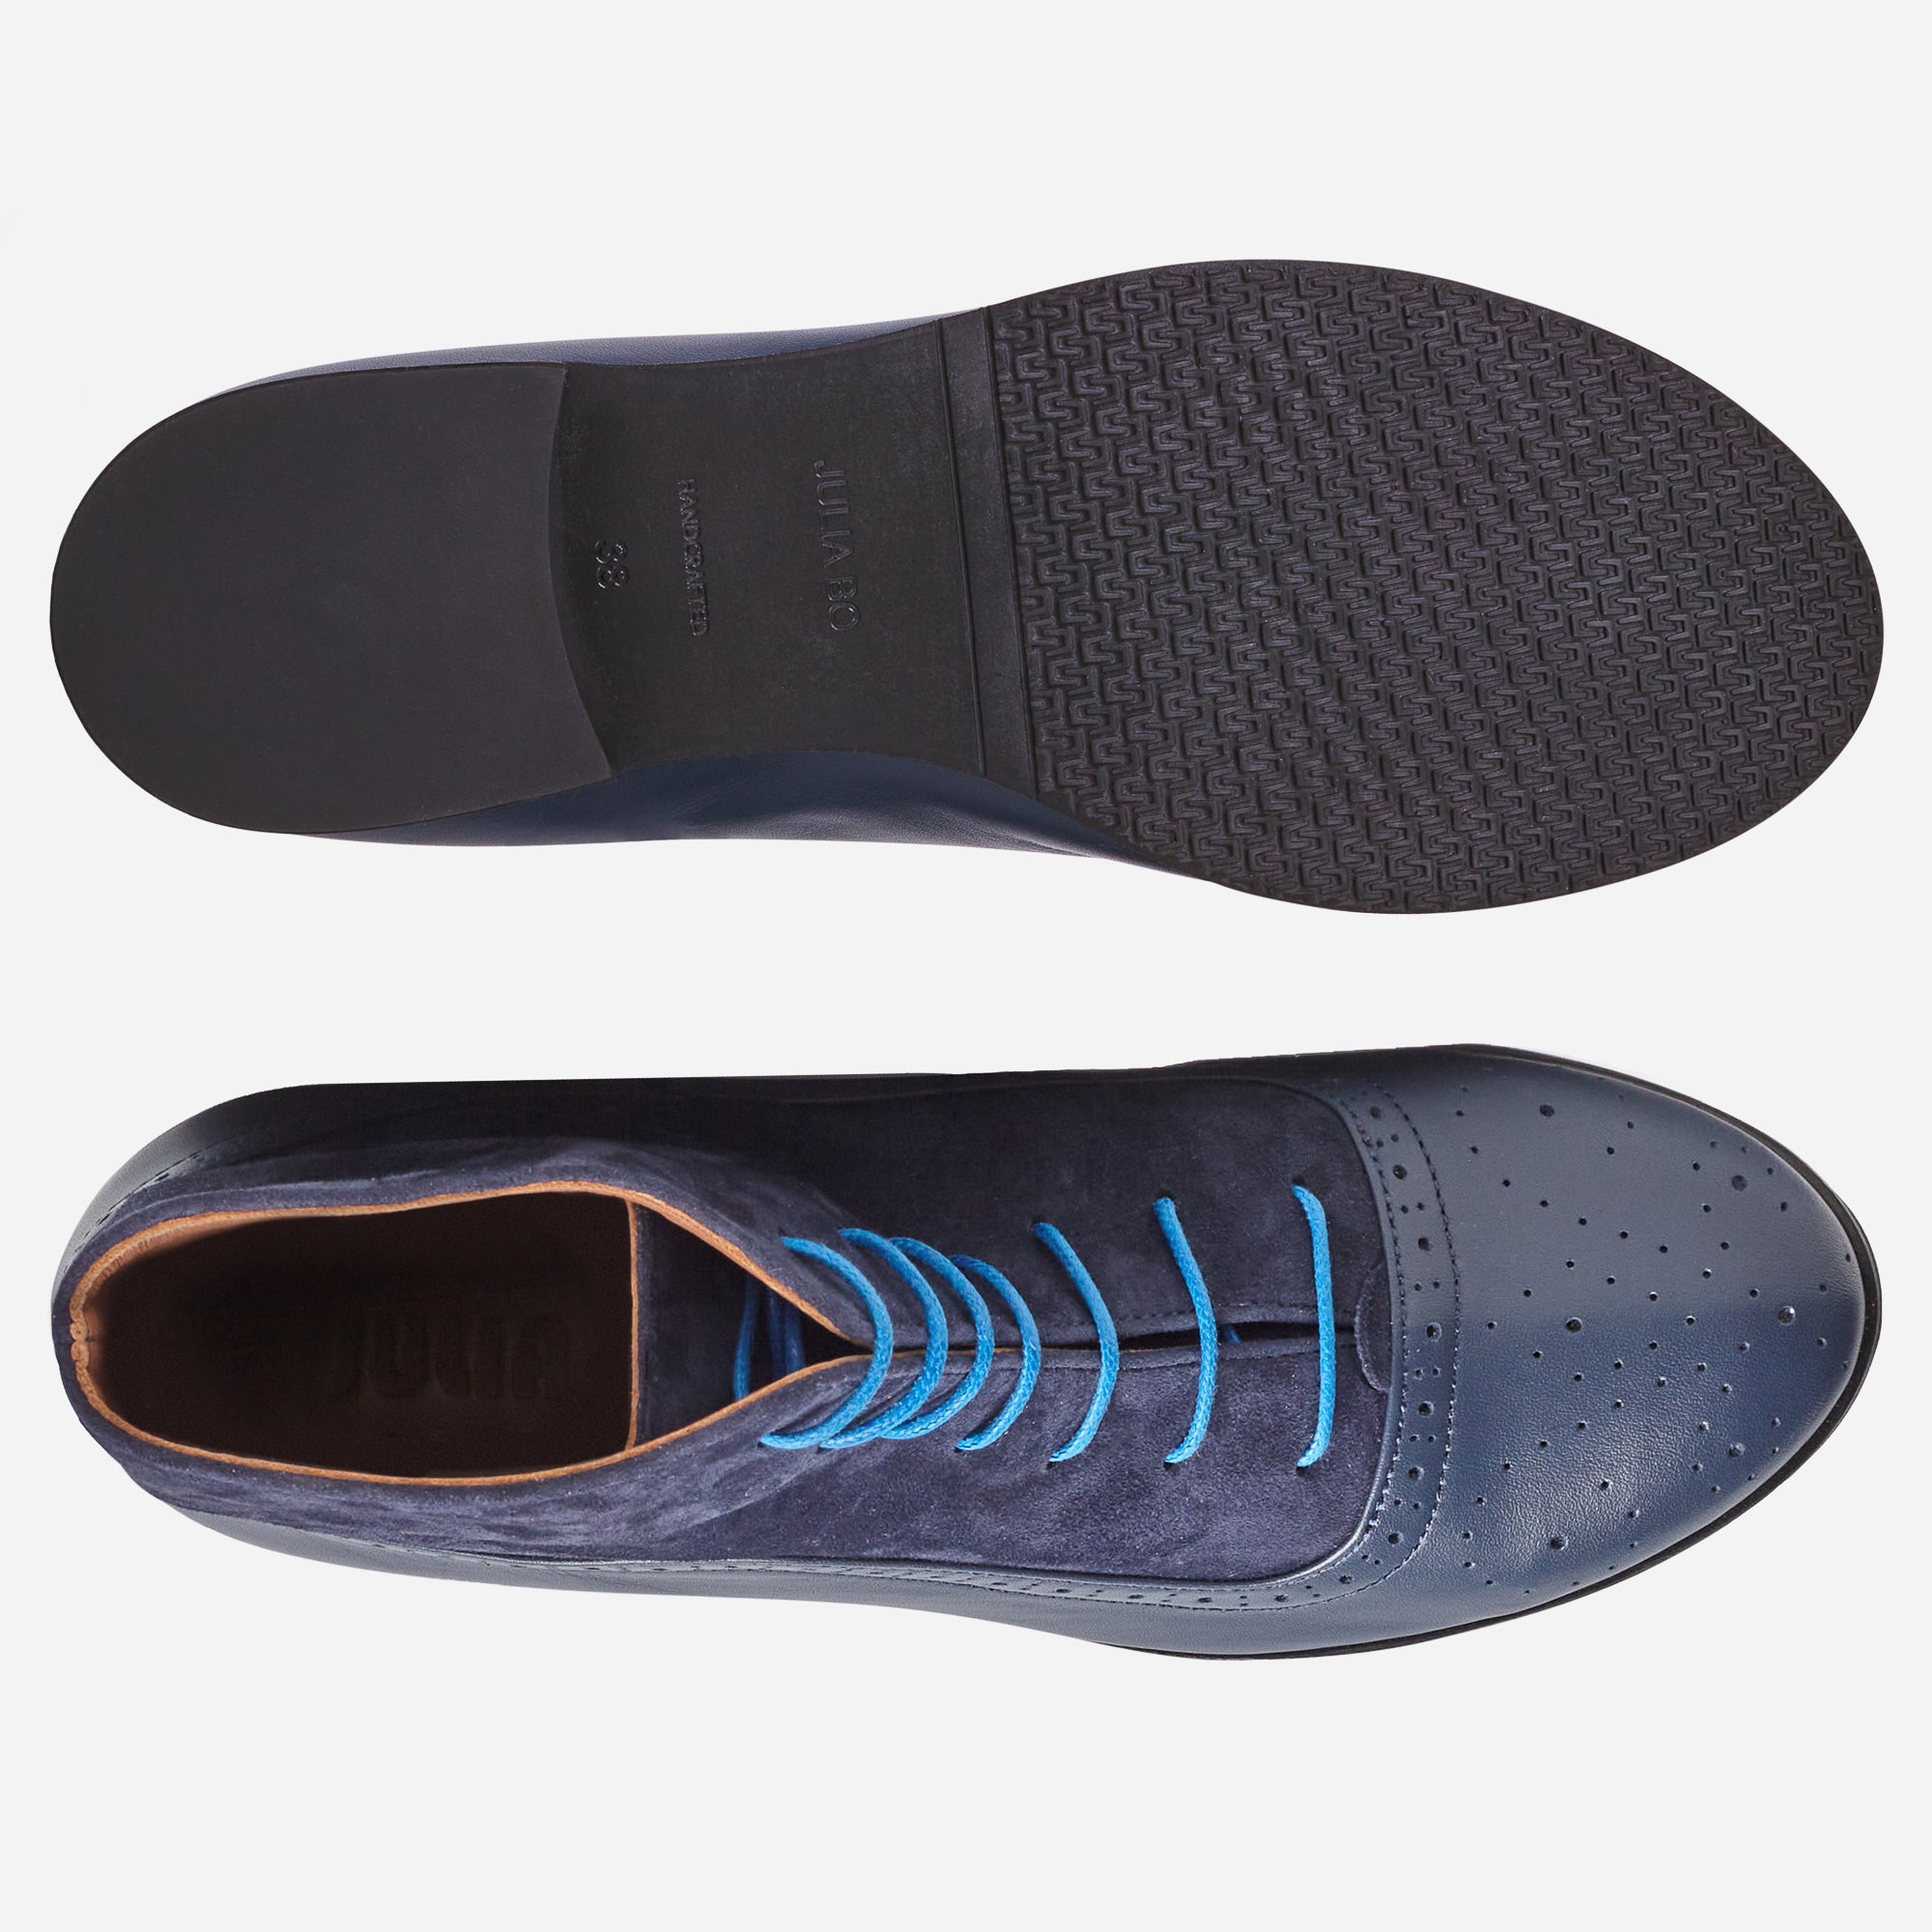 Blue Jeans Aesthetic Sneakers, EU38 (US7.0) / Blue